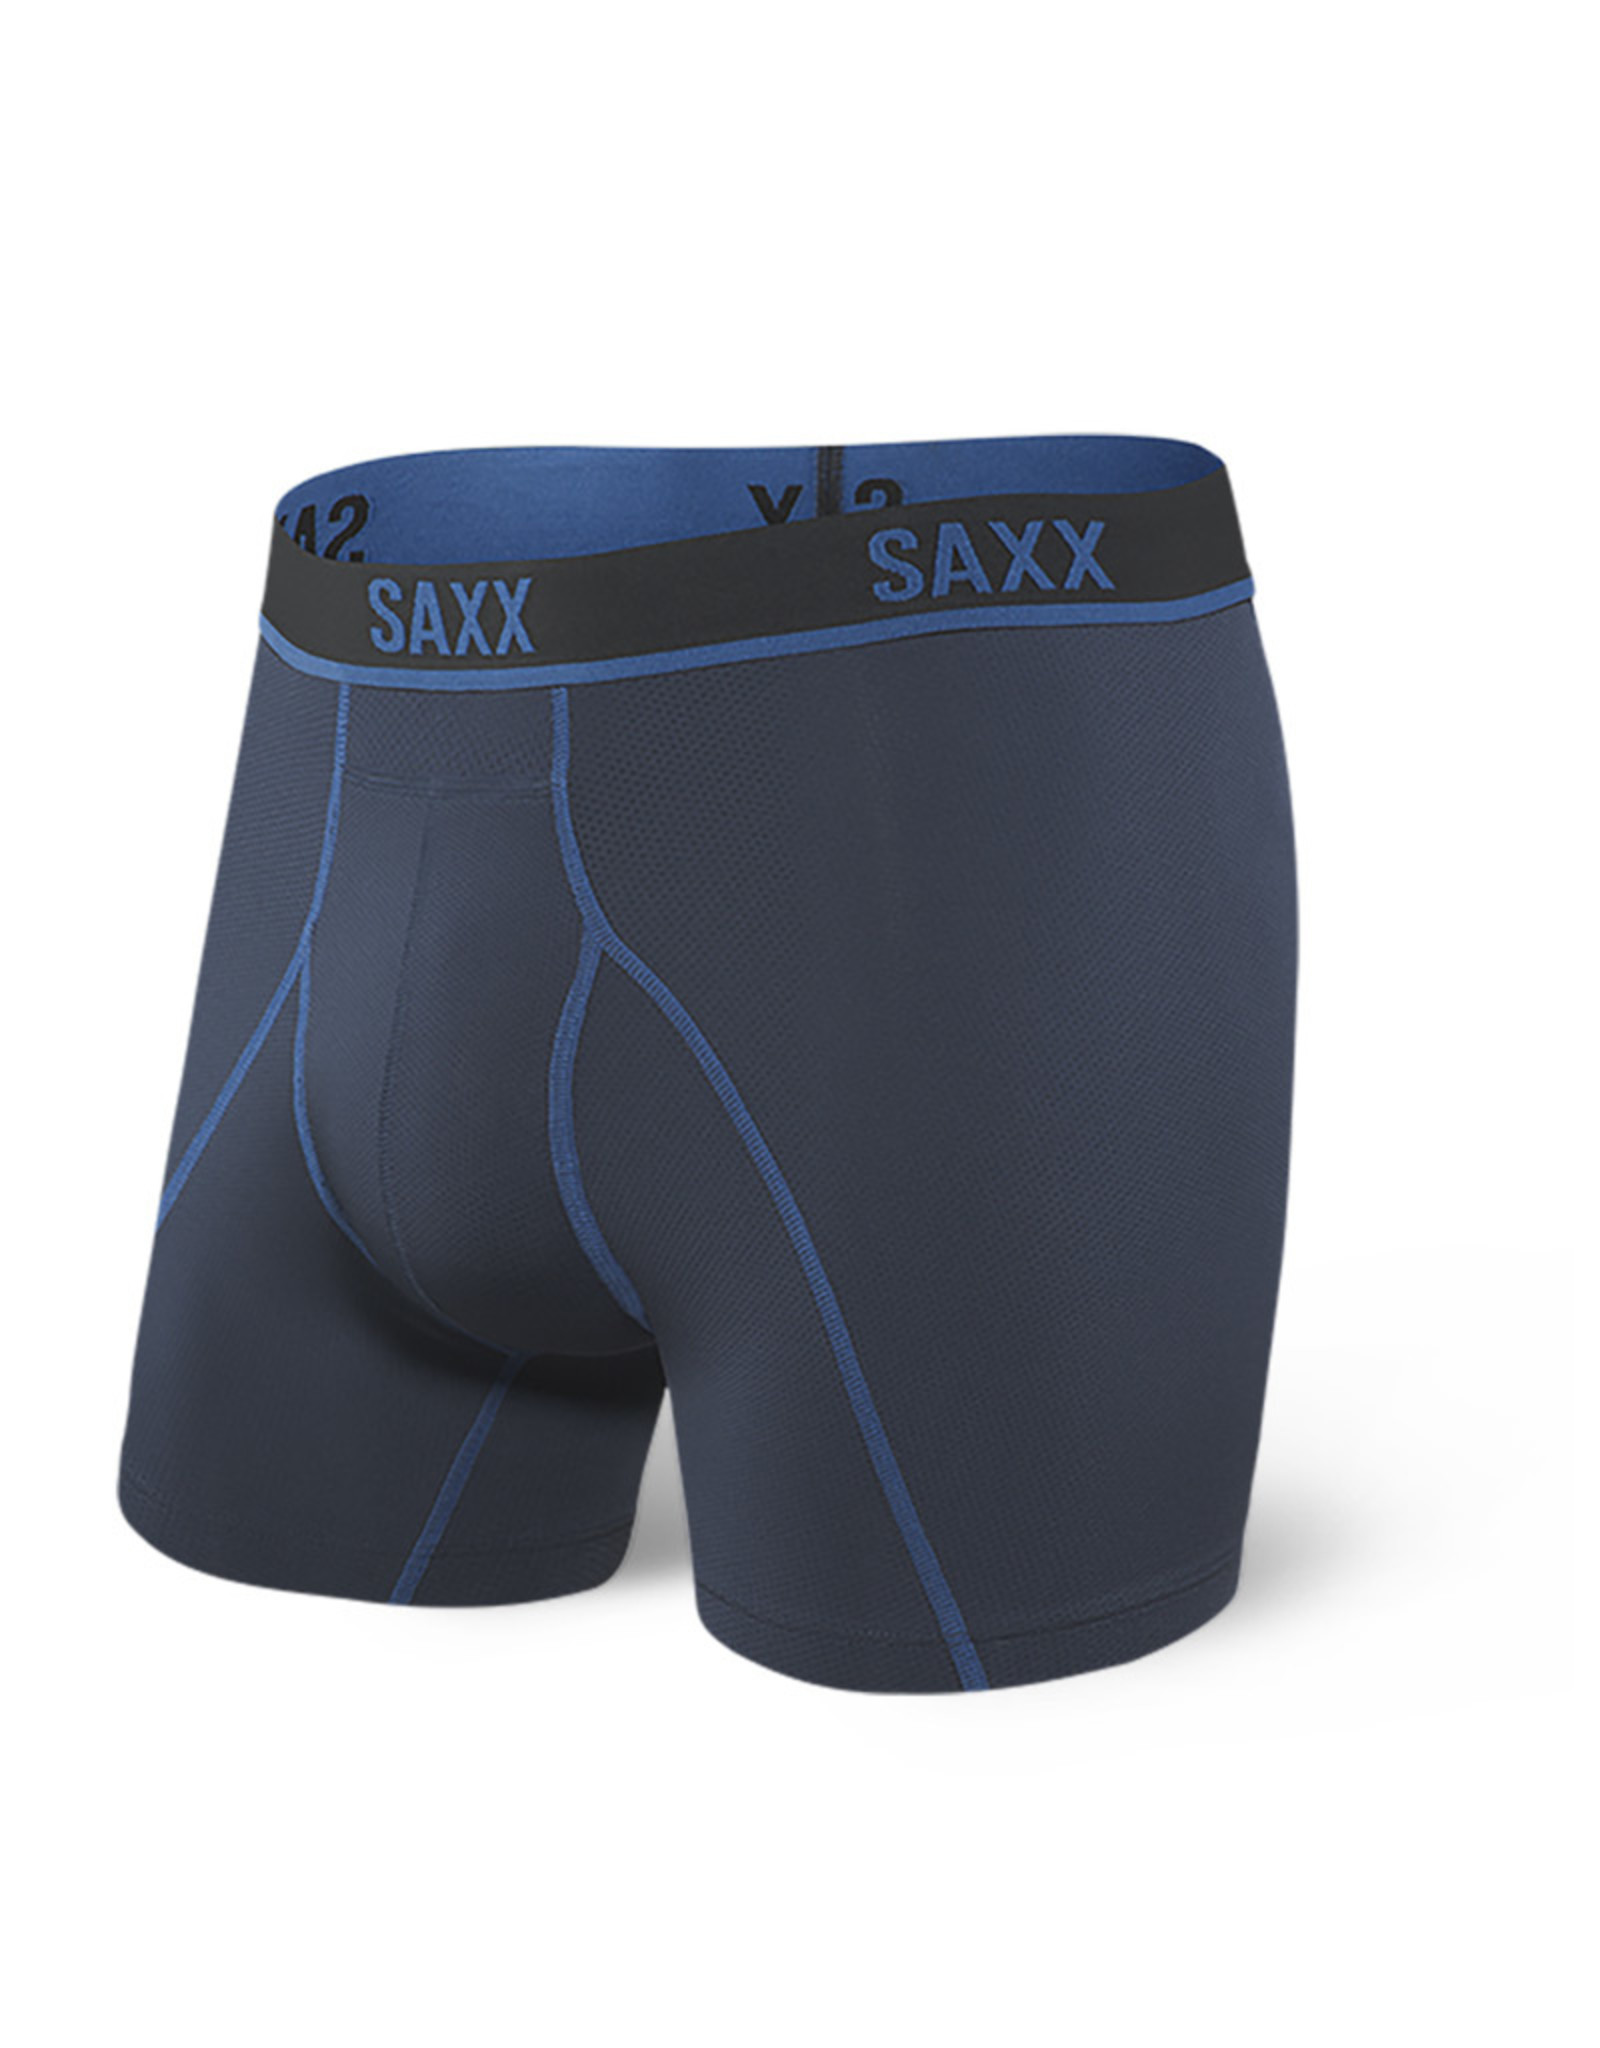 SAXX KINETIC HD BOXER BRIEF - Manhattan Running Company